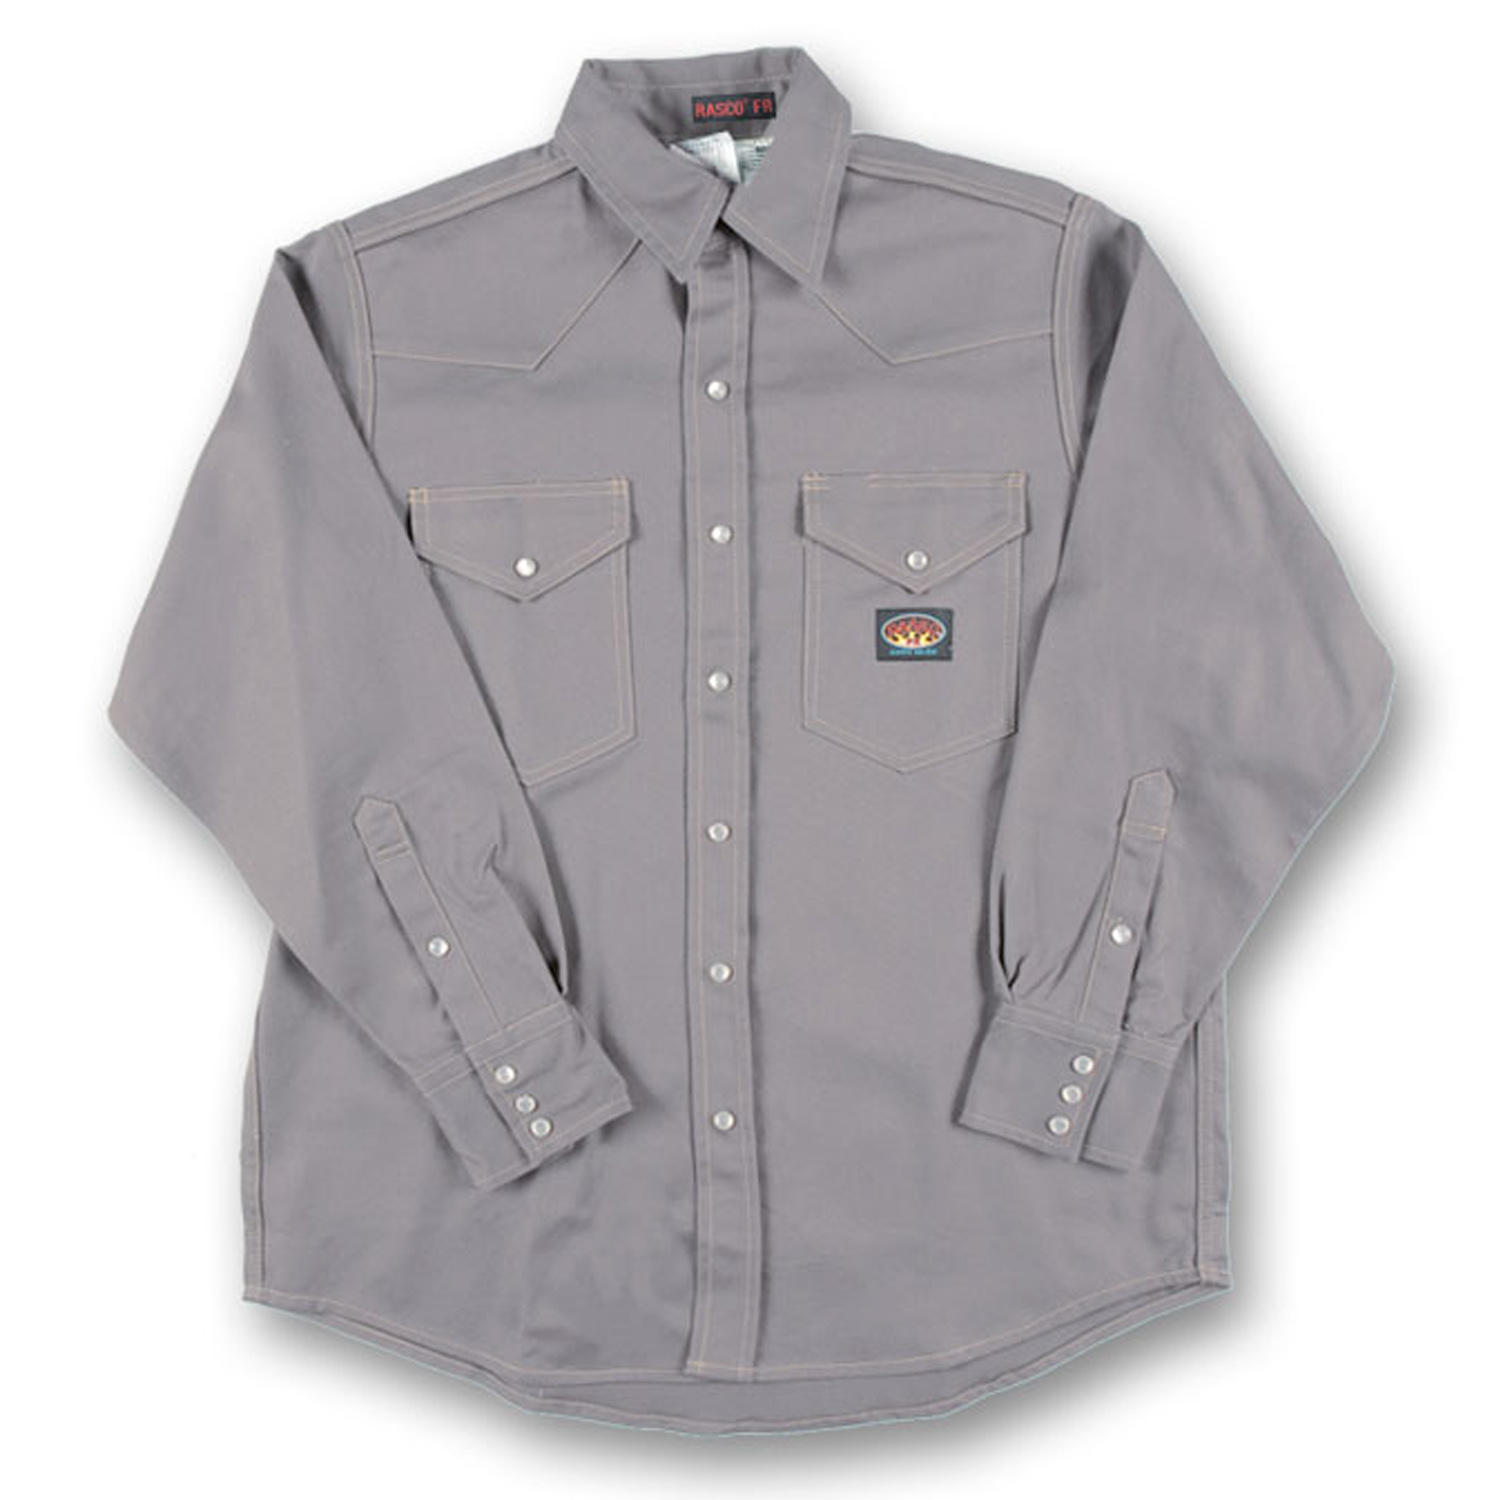 Rasco Flame Resistant Lightweight Work Shirt - Gray